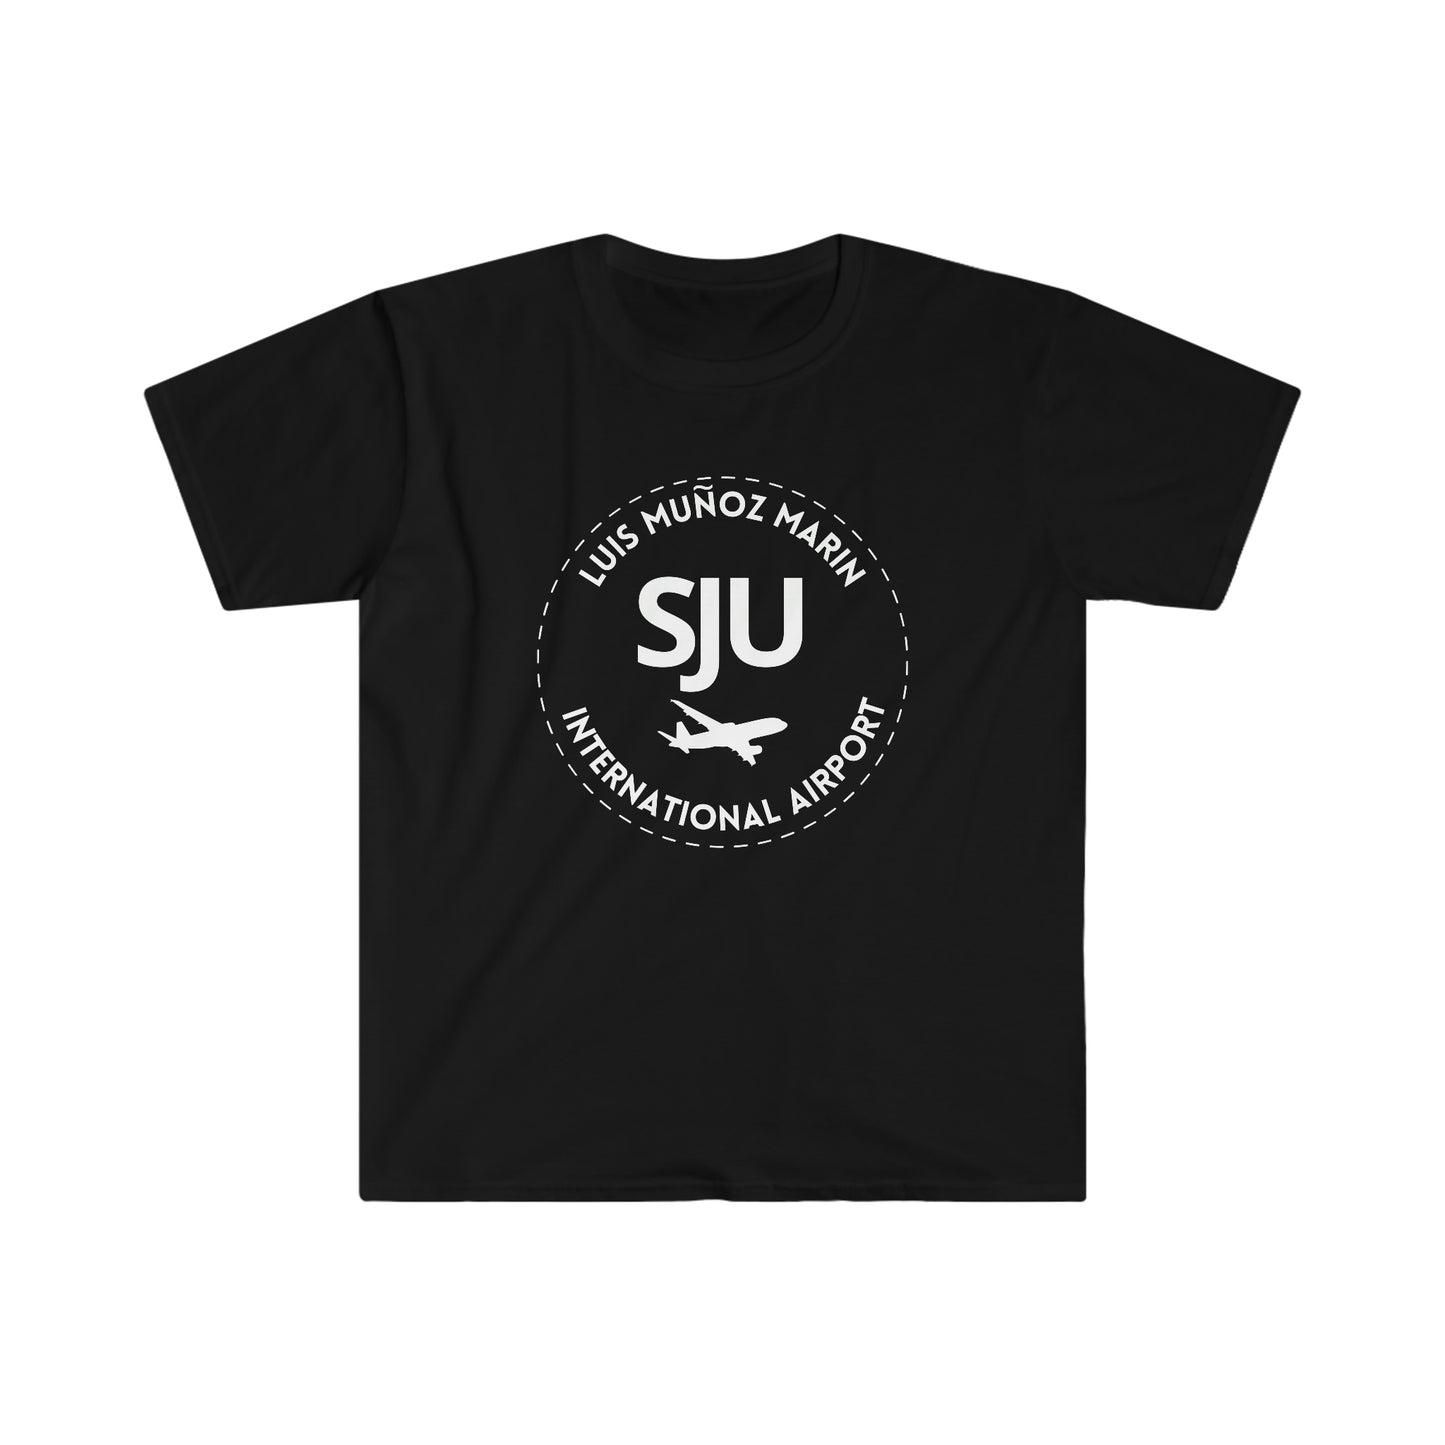 San Juan SJU Airport Swag Aviation & Travel T-Shirt